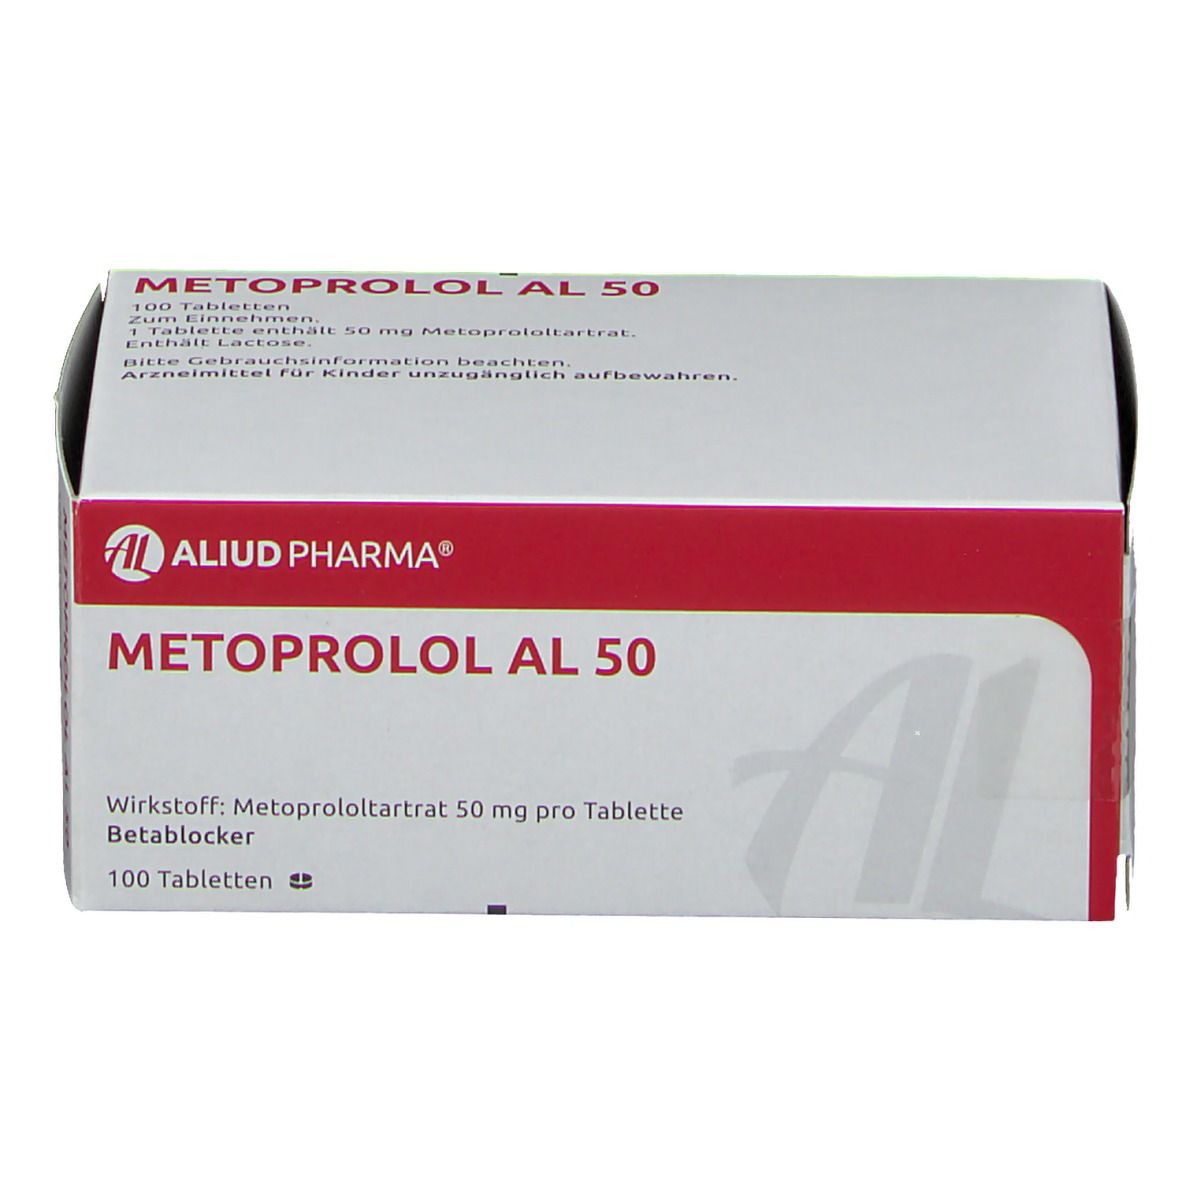 Metoprolol AL 50